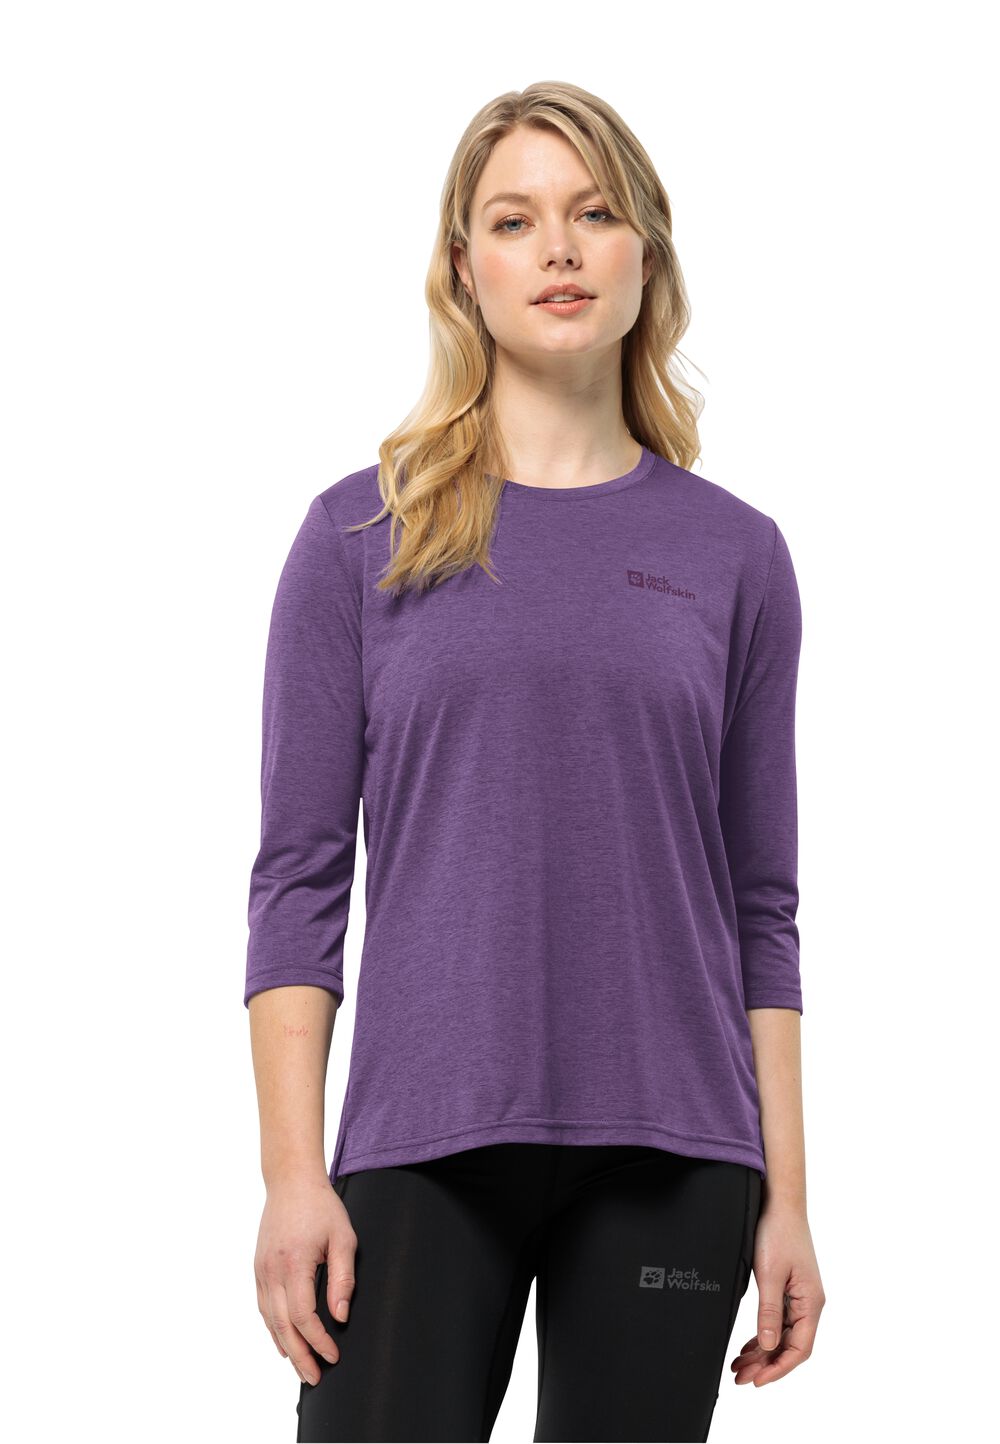 Jack Wolfskin Crosstrail 3 4 T-Shirt Women Functioneel shirt Dames XS ultraviolet